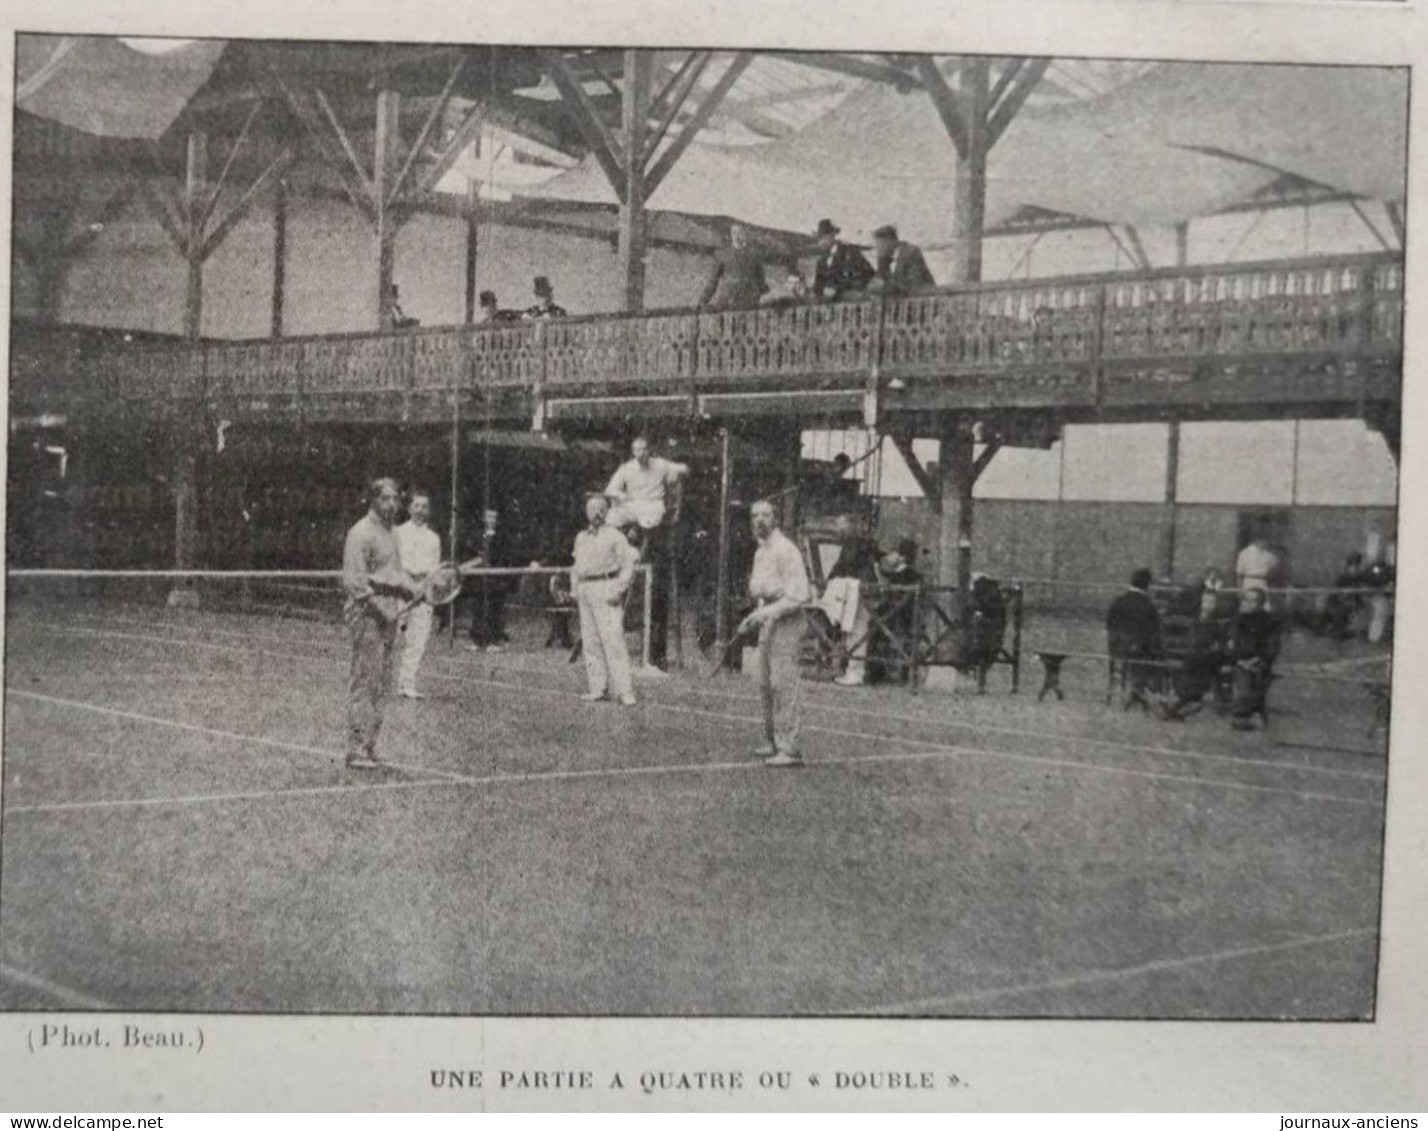 1898 TENNIS - AU TENNIS CLUB DE PARIS - P LECARON ( PRÉSIDENT ) - TOM BURKE ( PROFESSEUR ) - LA VIE AU GRAND AIR